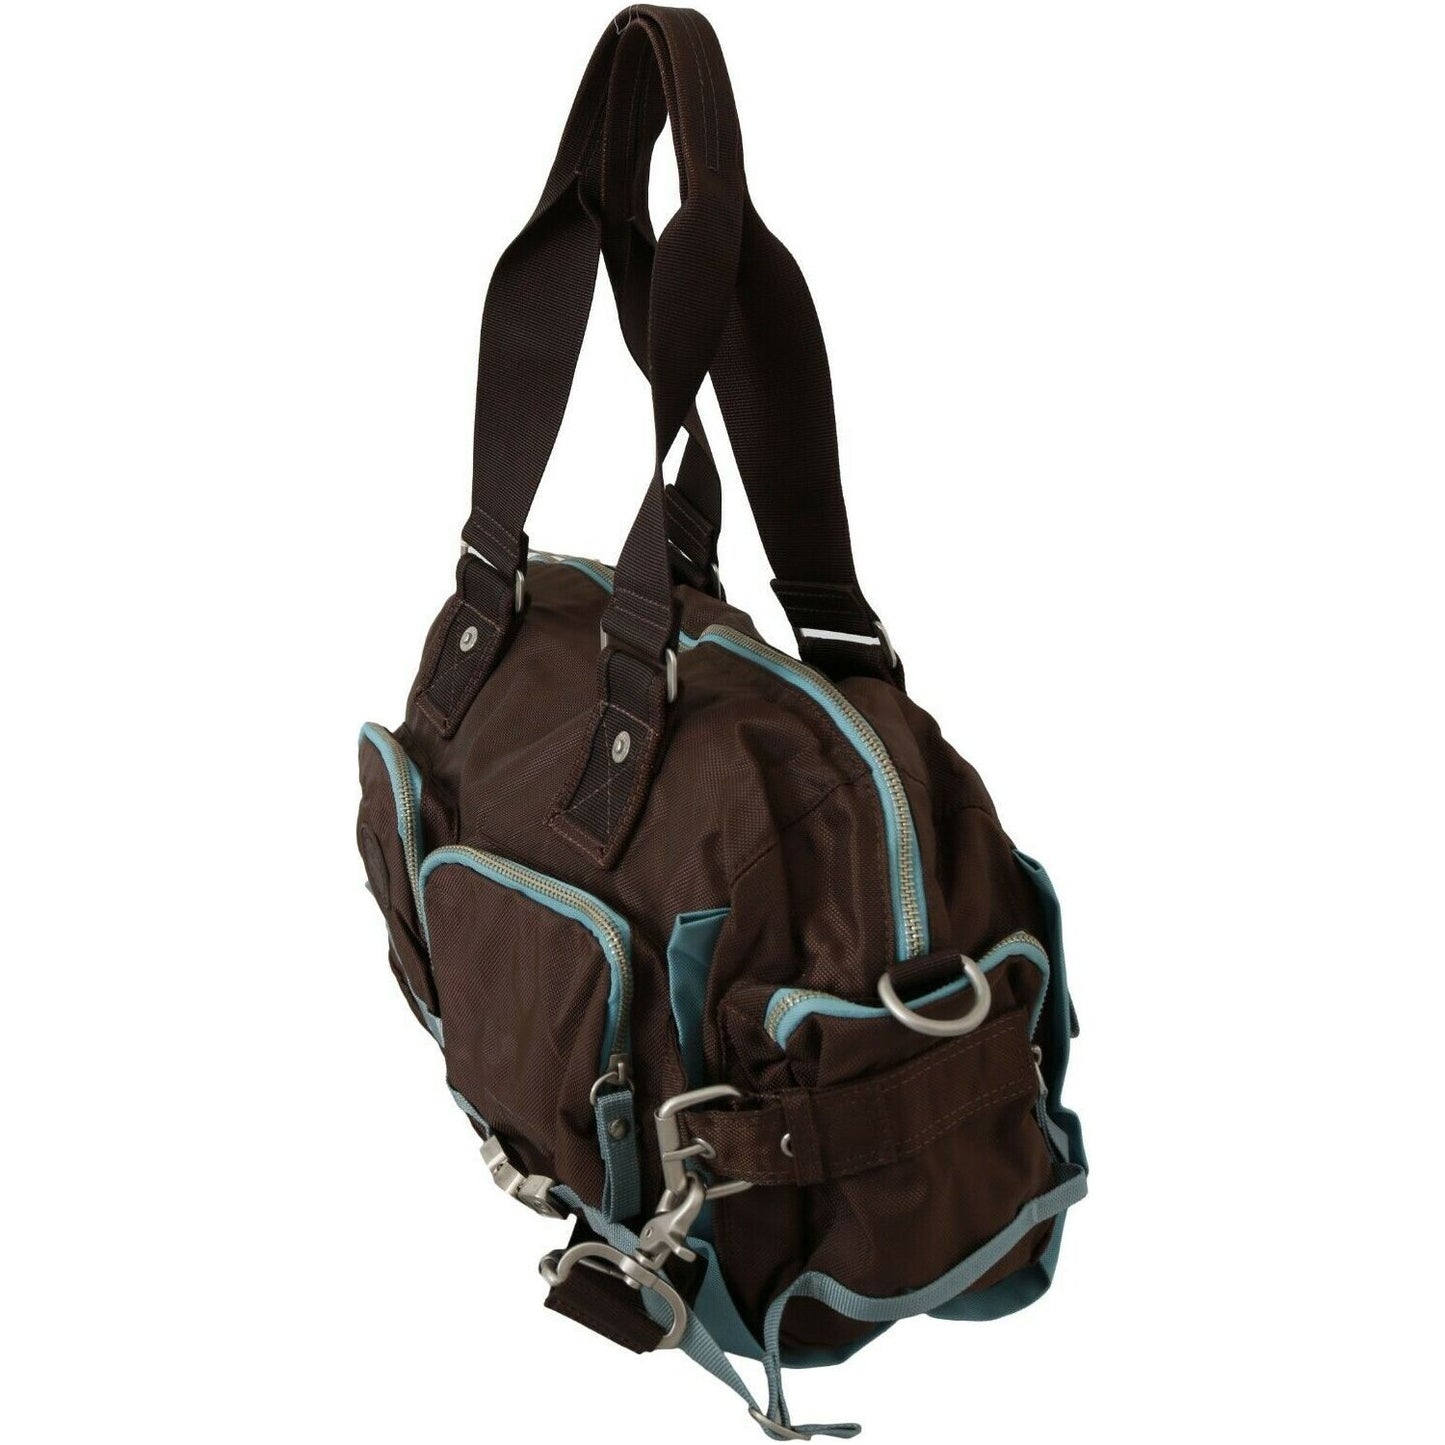 WAYFARER Elegant Duffel Travel Bag in Earthy Brown Luggage brown-handbag-duffel-travel-purse s-l1600-16-1-5c5c1e18-97e.jpg